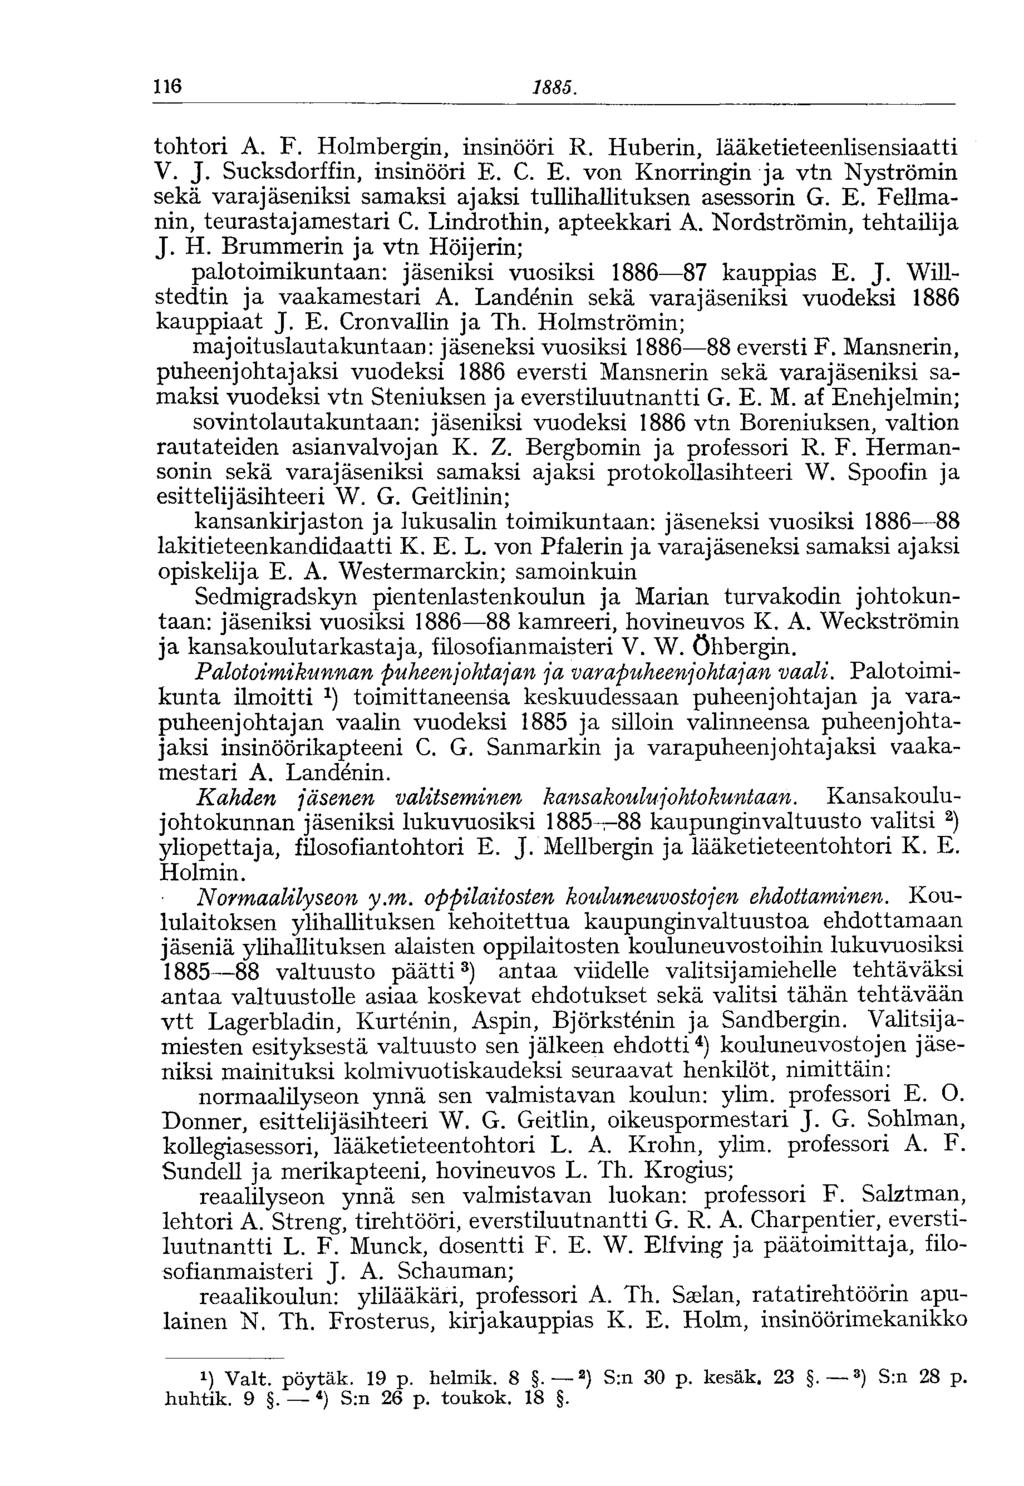 '116 1885. tohtori A. F. Holmbergin, insinööri R. Huberin, lääketieteenlisensiaatti V. J. Sucksdorffin, insinööri E.